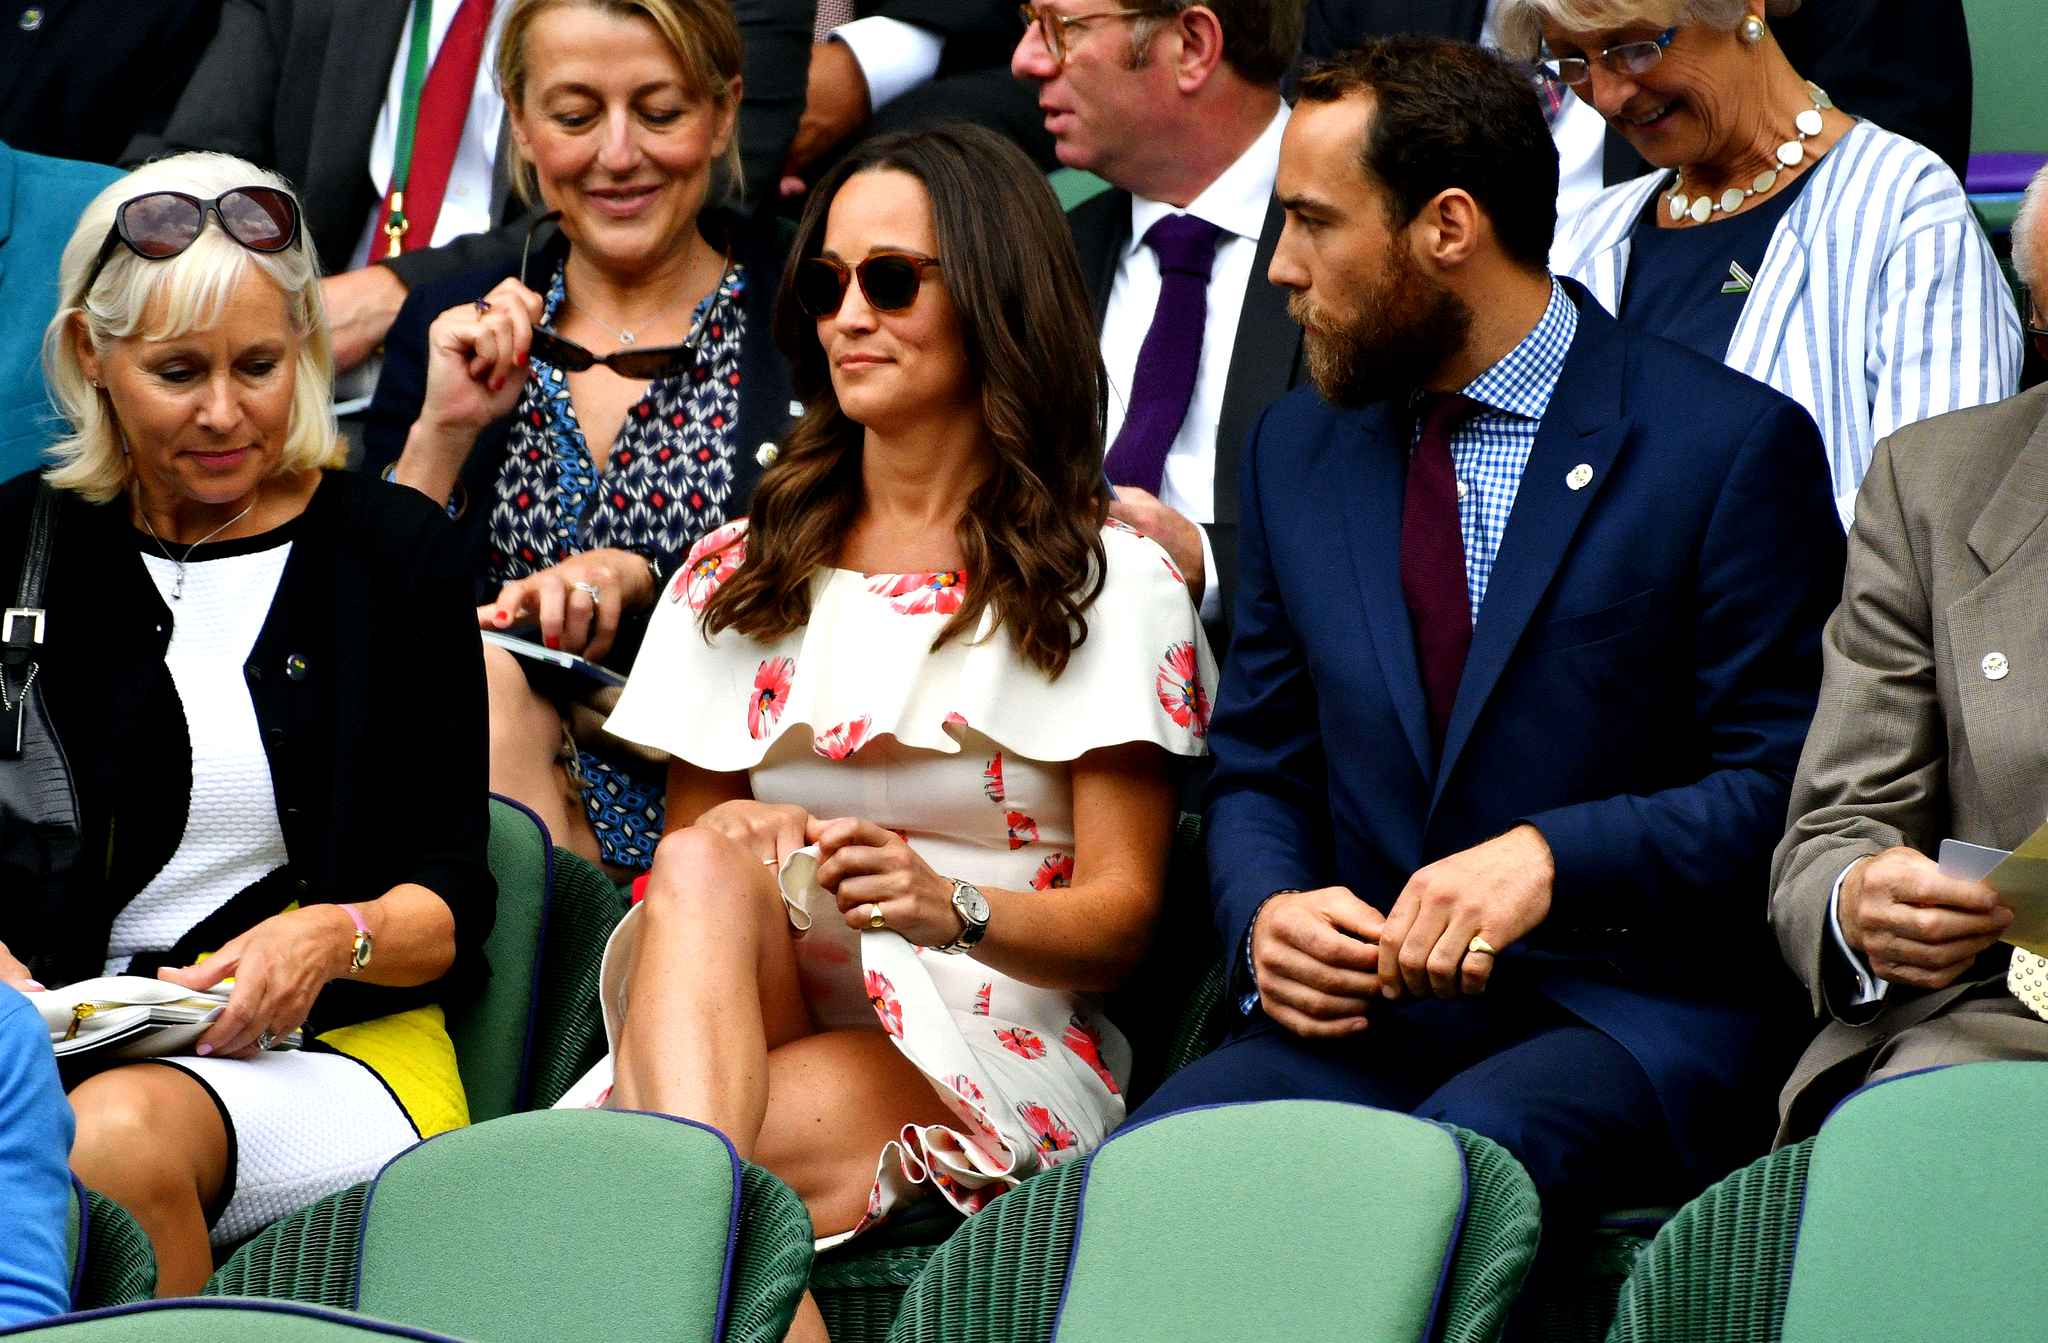 Pippa Middleton à Wimbledon.jpg - Casimages.com.